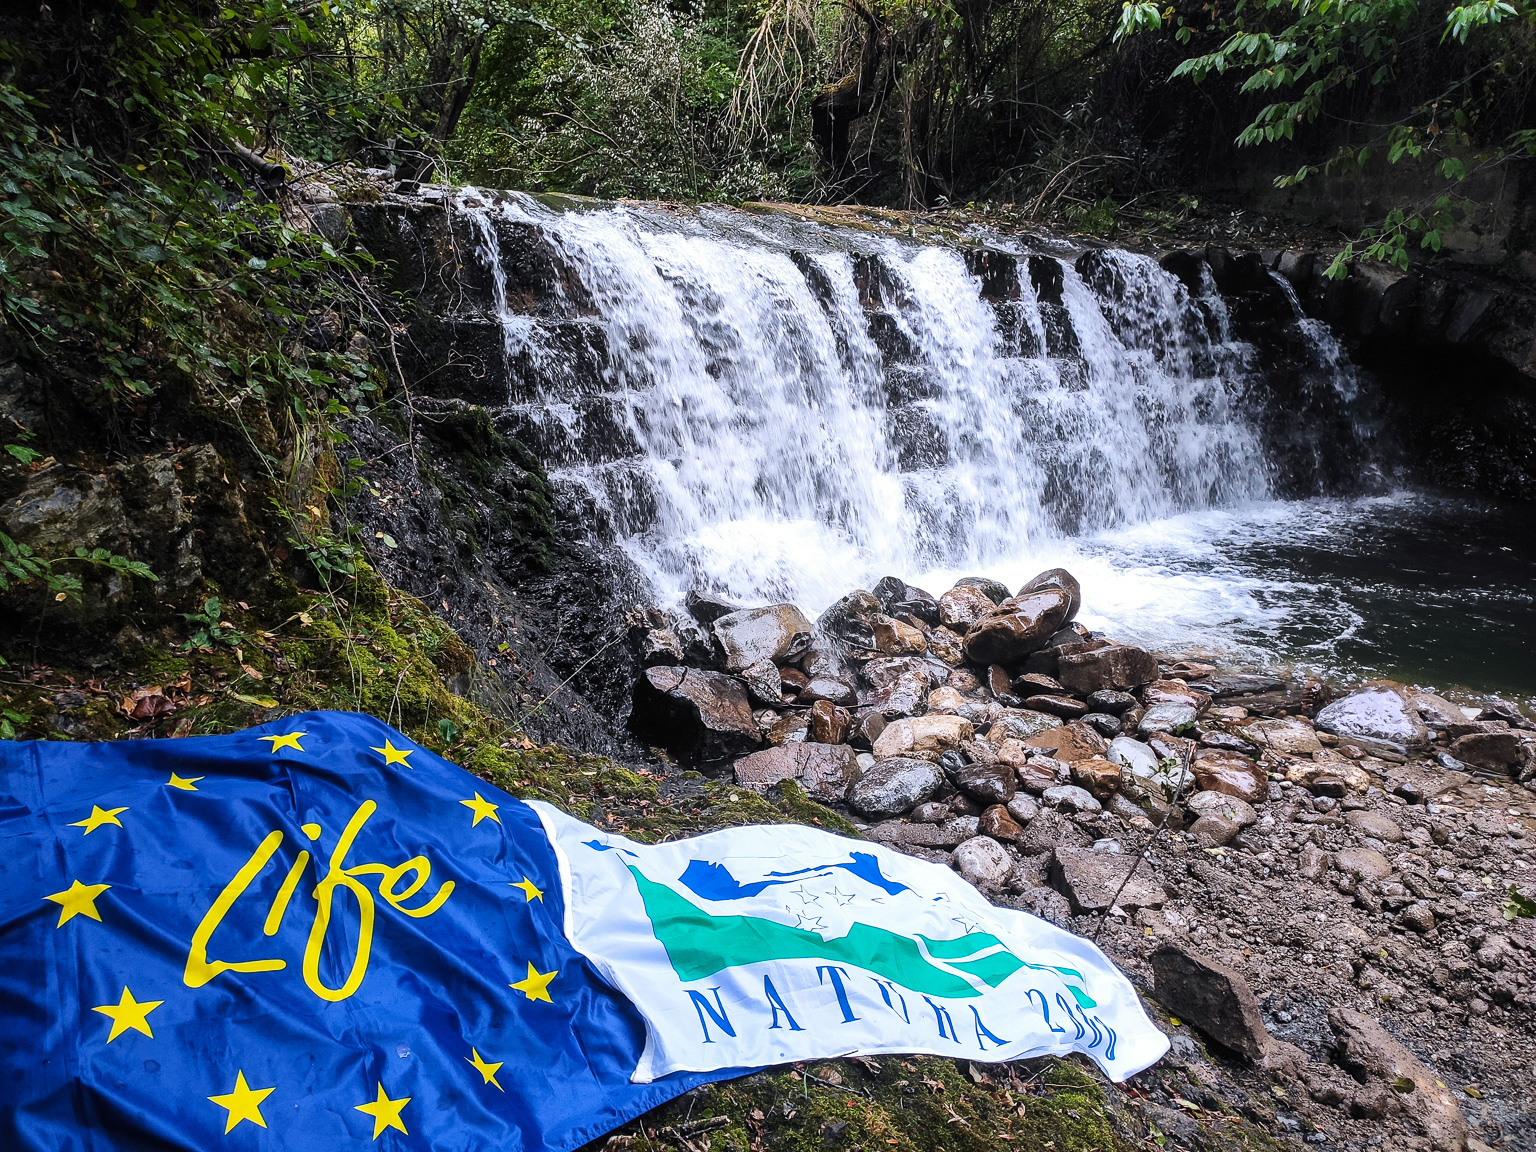 Life DIVAQUA Project Liberates Rivers for Salmon in Picos de Europa, Spain